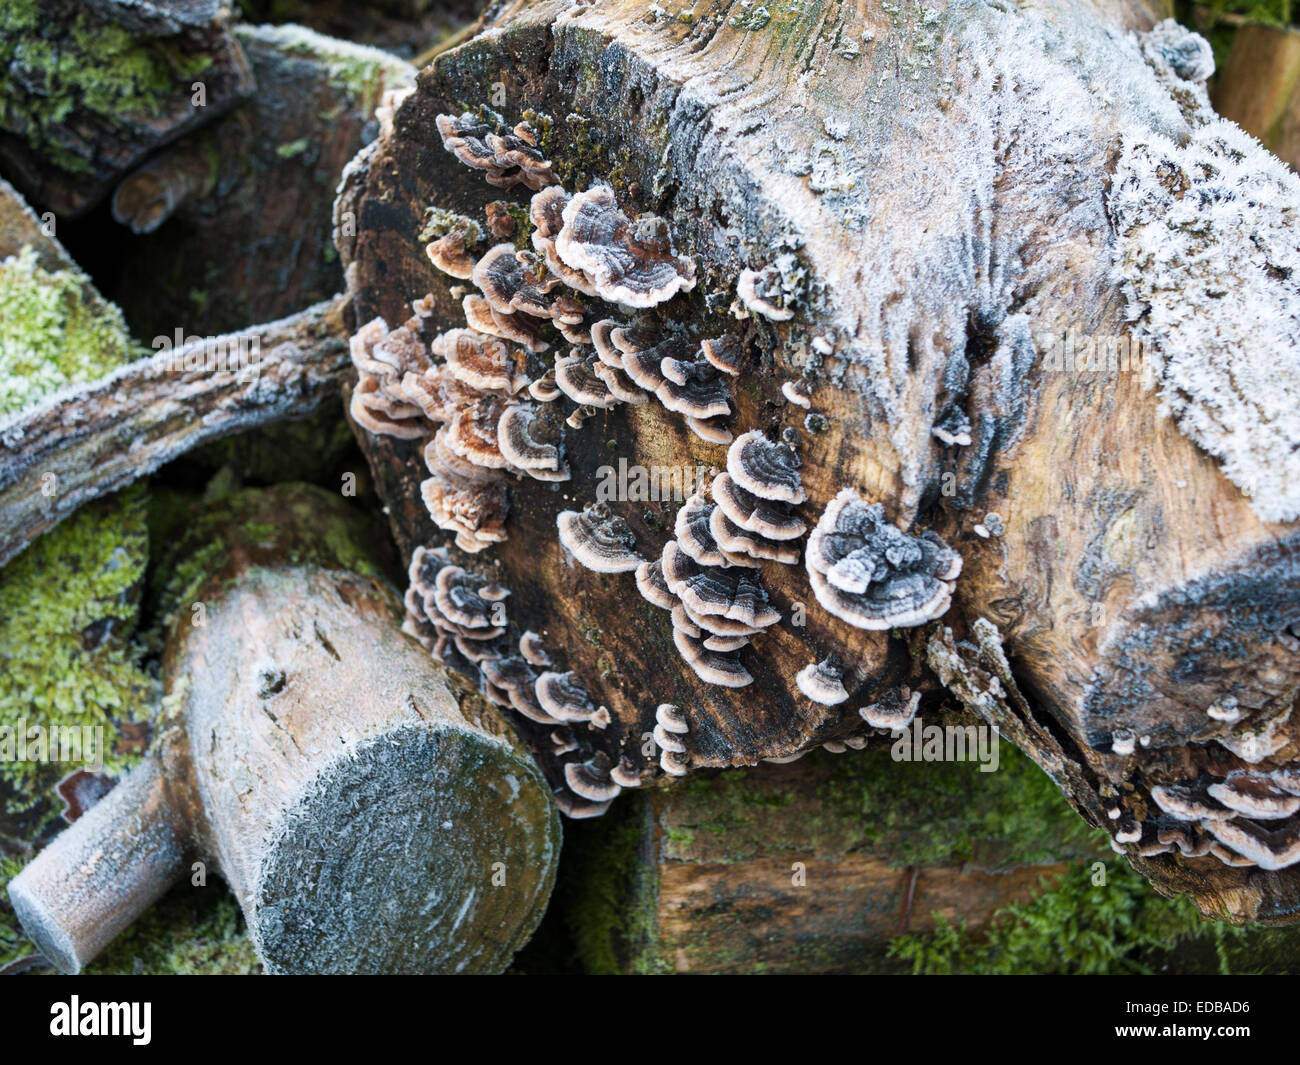 Hoar frost on wild 'Turkey Tail' mushrooms - Coriolus versicolor Stock Photo